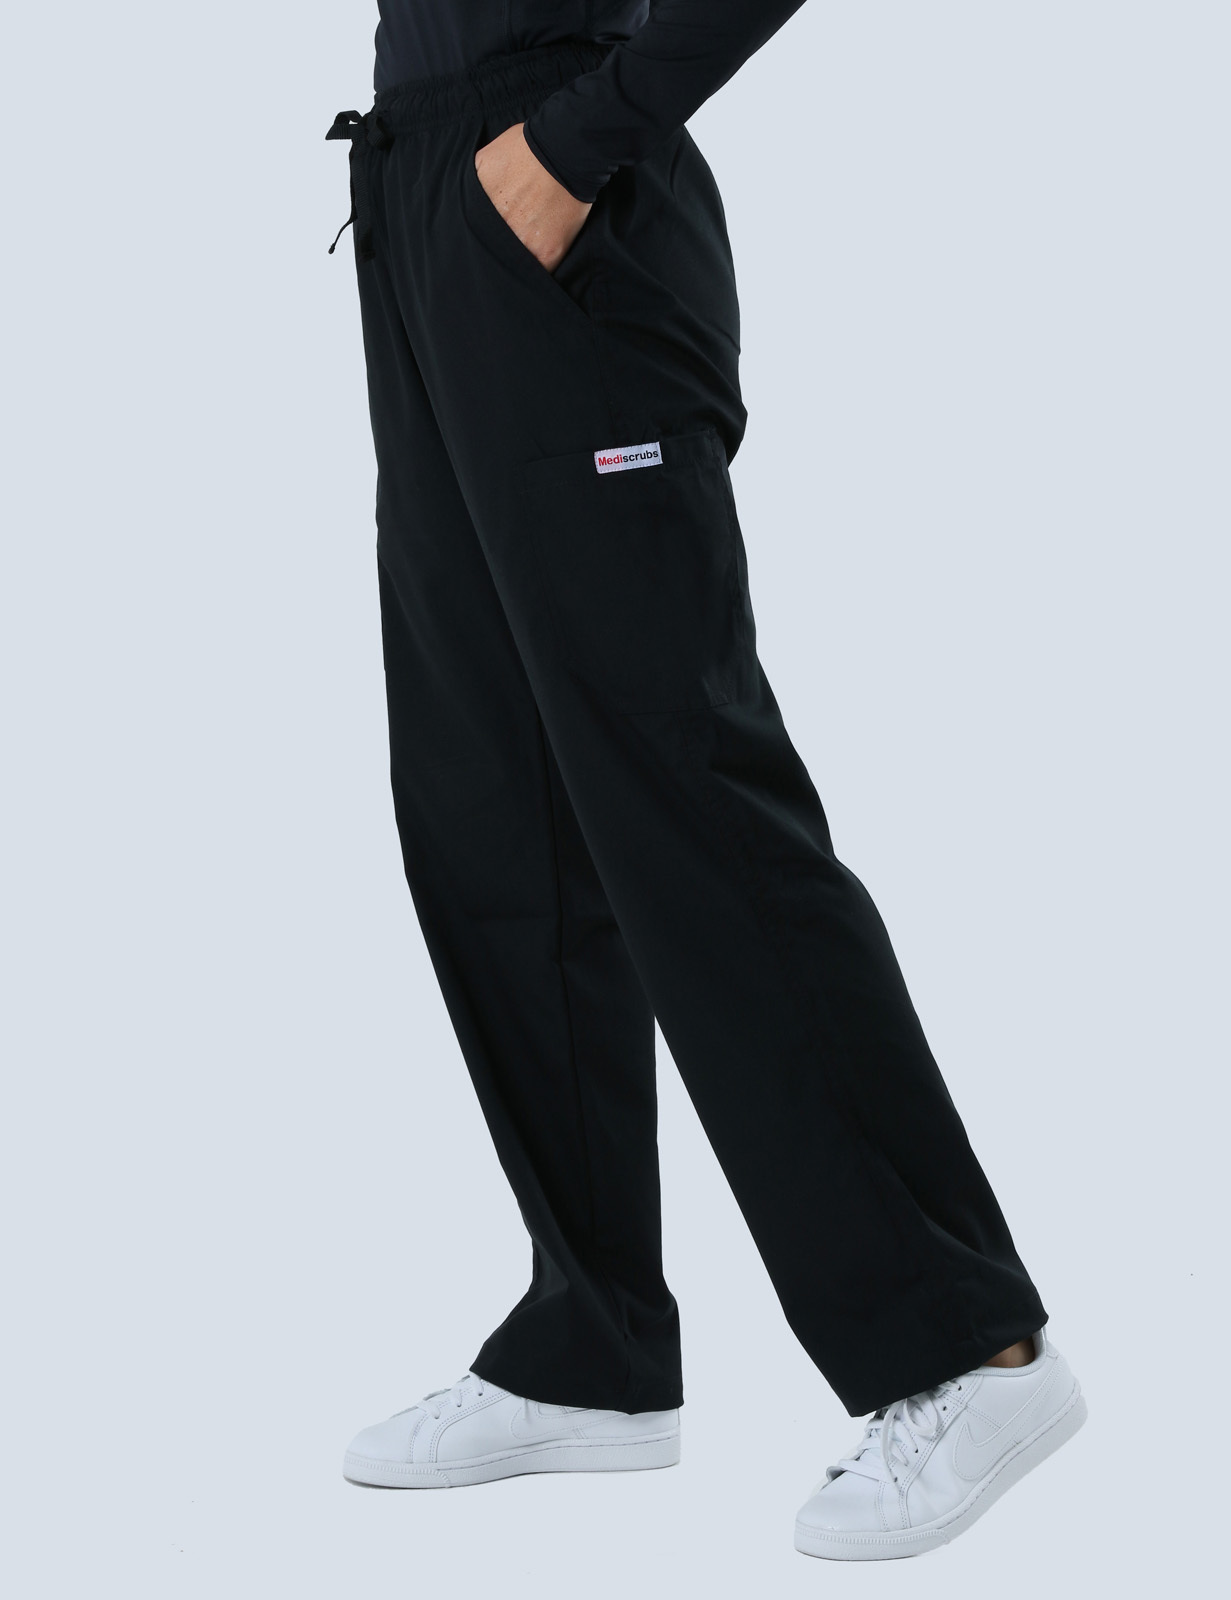 Royal Hobart Hospital Emergency Department Specialist Uniform Set Bundle (4 Pocket Top and Cargo Pants in Black incl Logo)